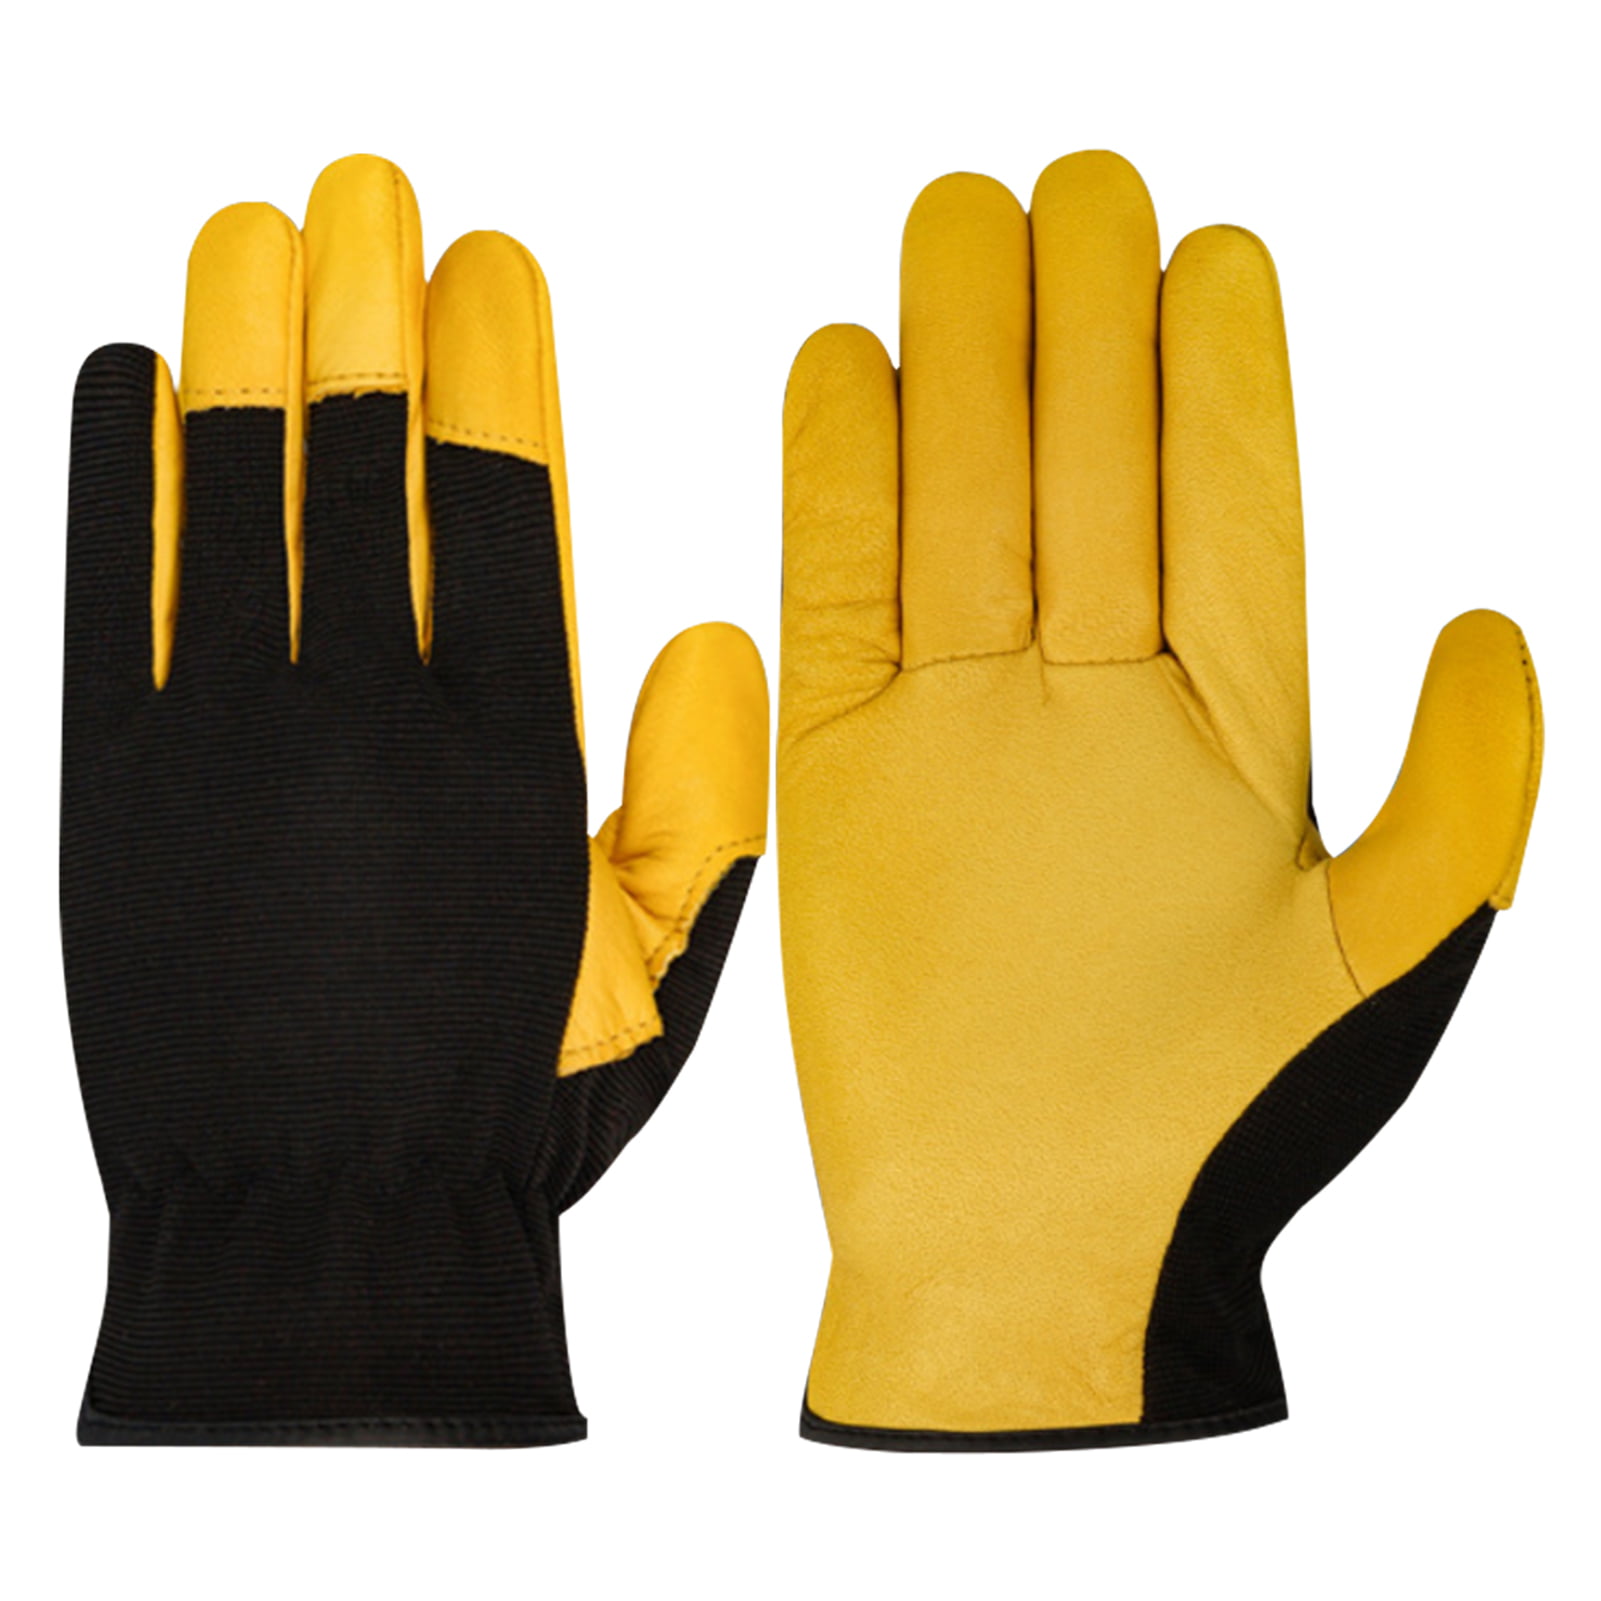 Mens Goatskin Leather Work Golves Garden Yard Construction Mechanics Work Gloves 